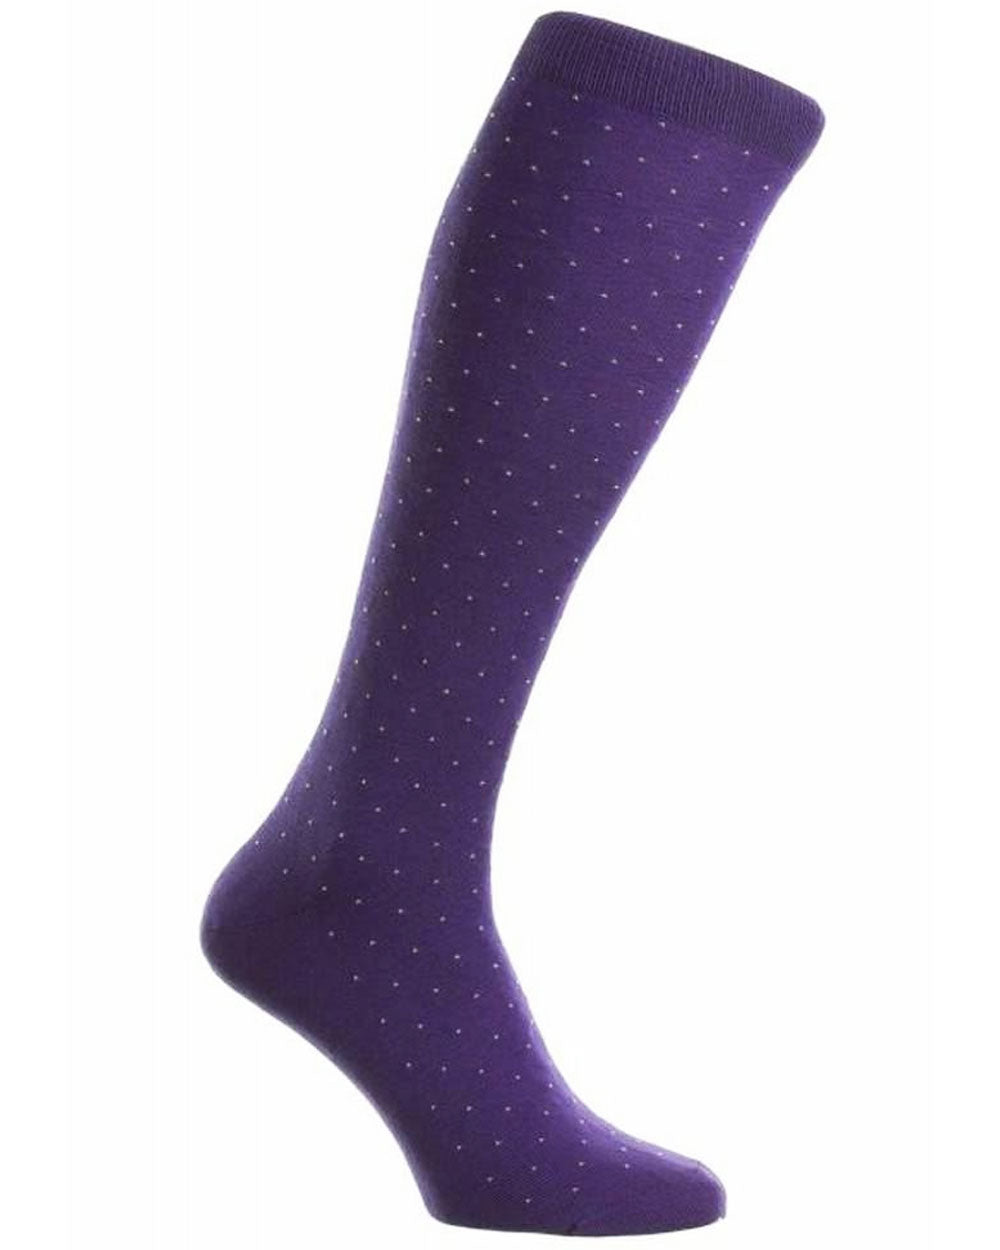 Gadsbury Over the Calf Sock in Purple